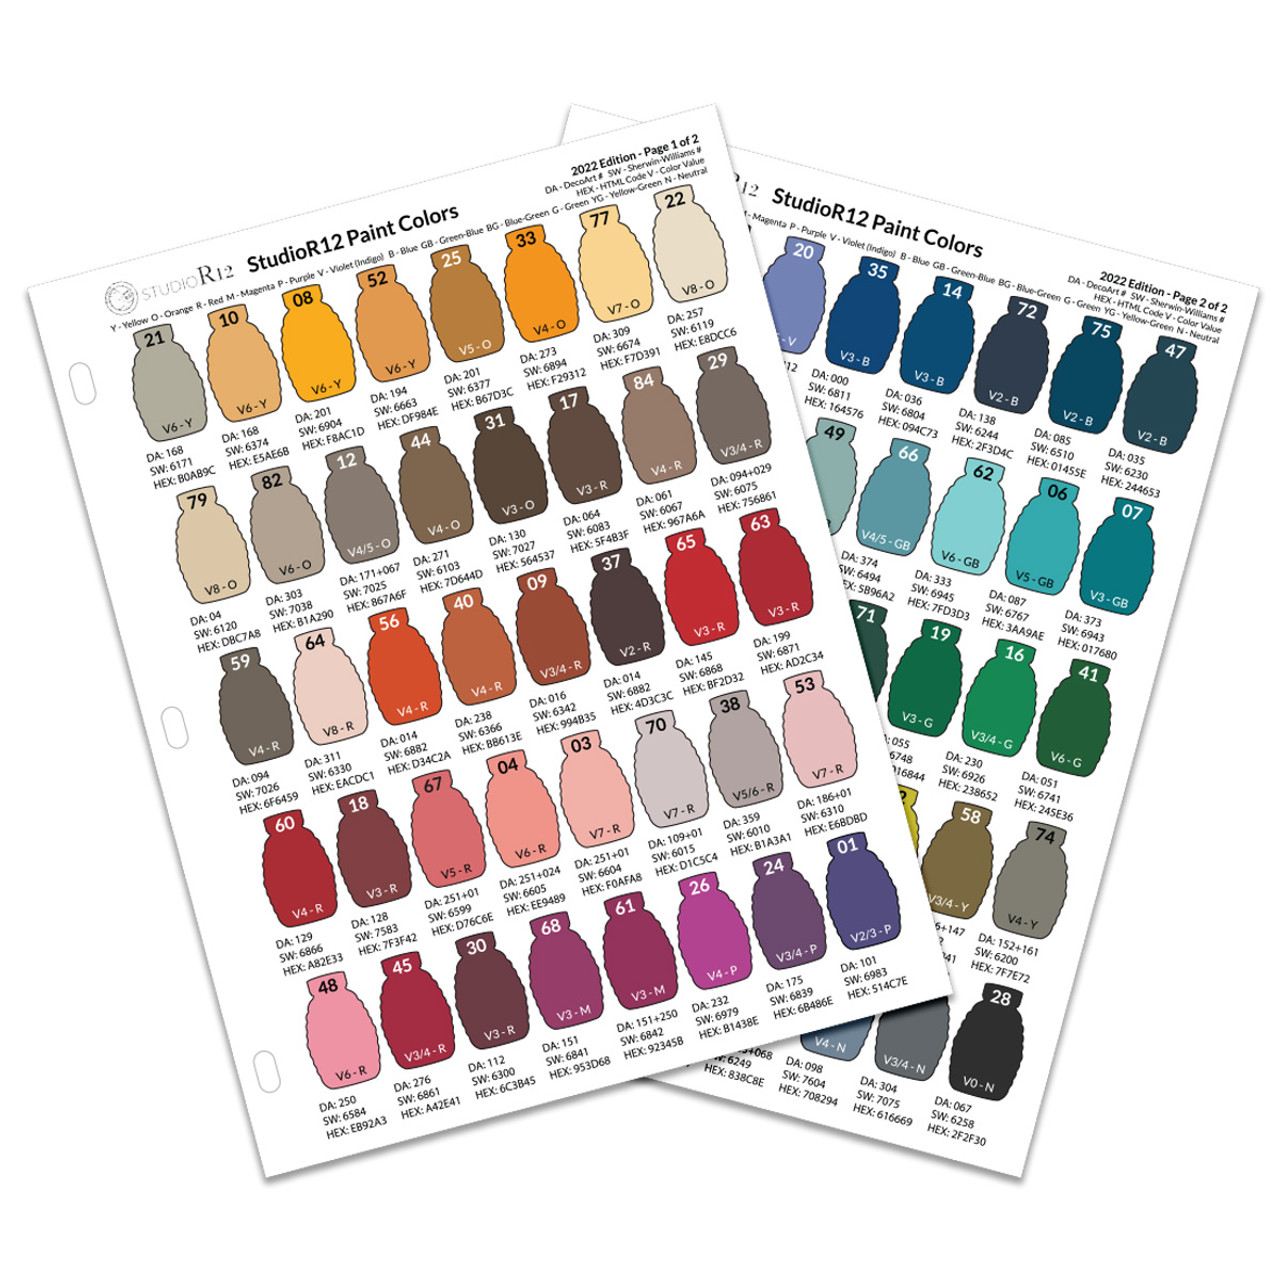 StudioR12 Paint Color Guide | Digital Download Reference Sheet | TOOL663_2